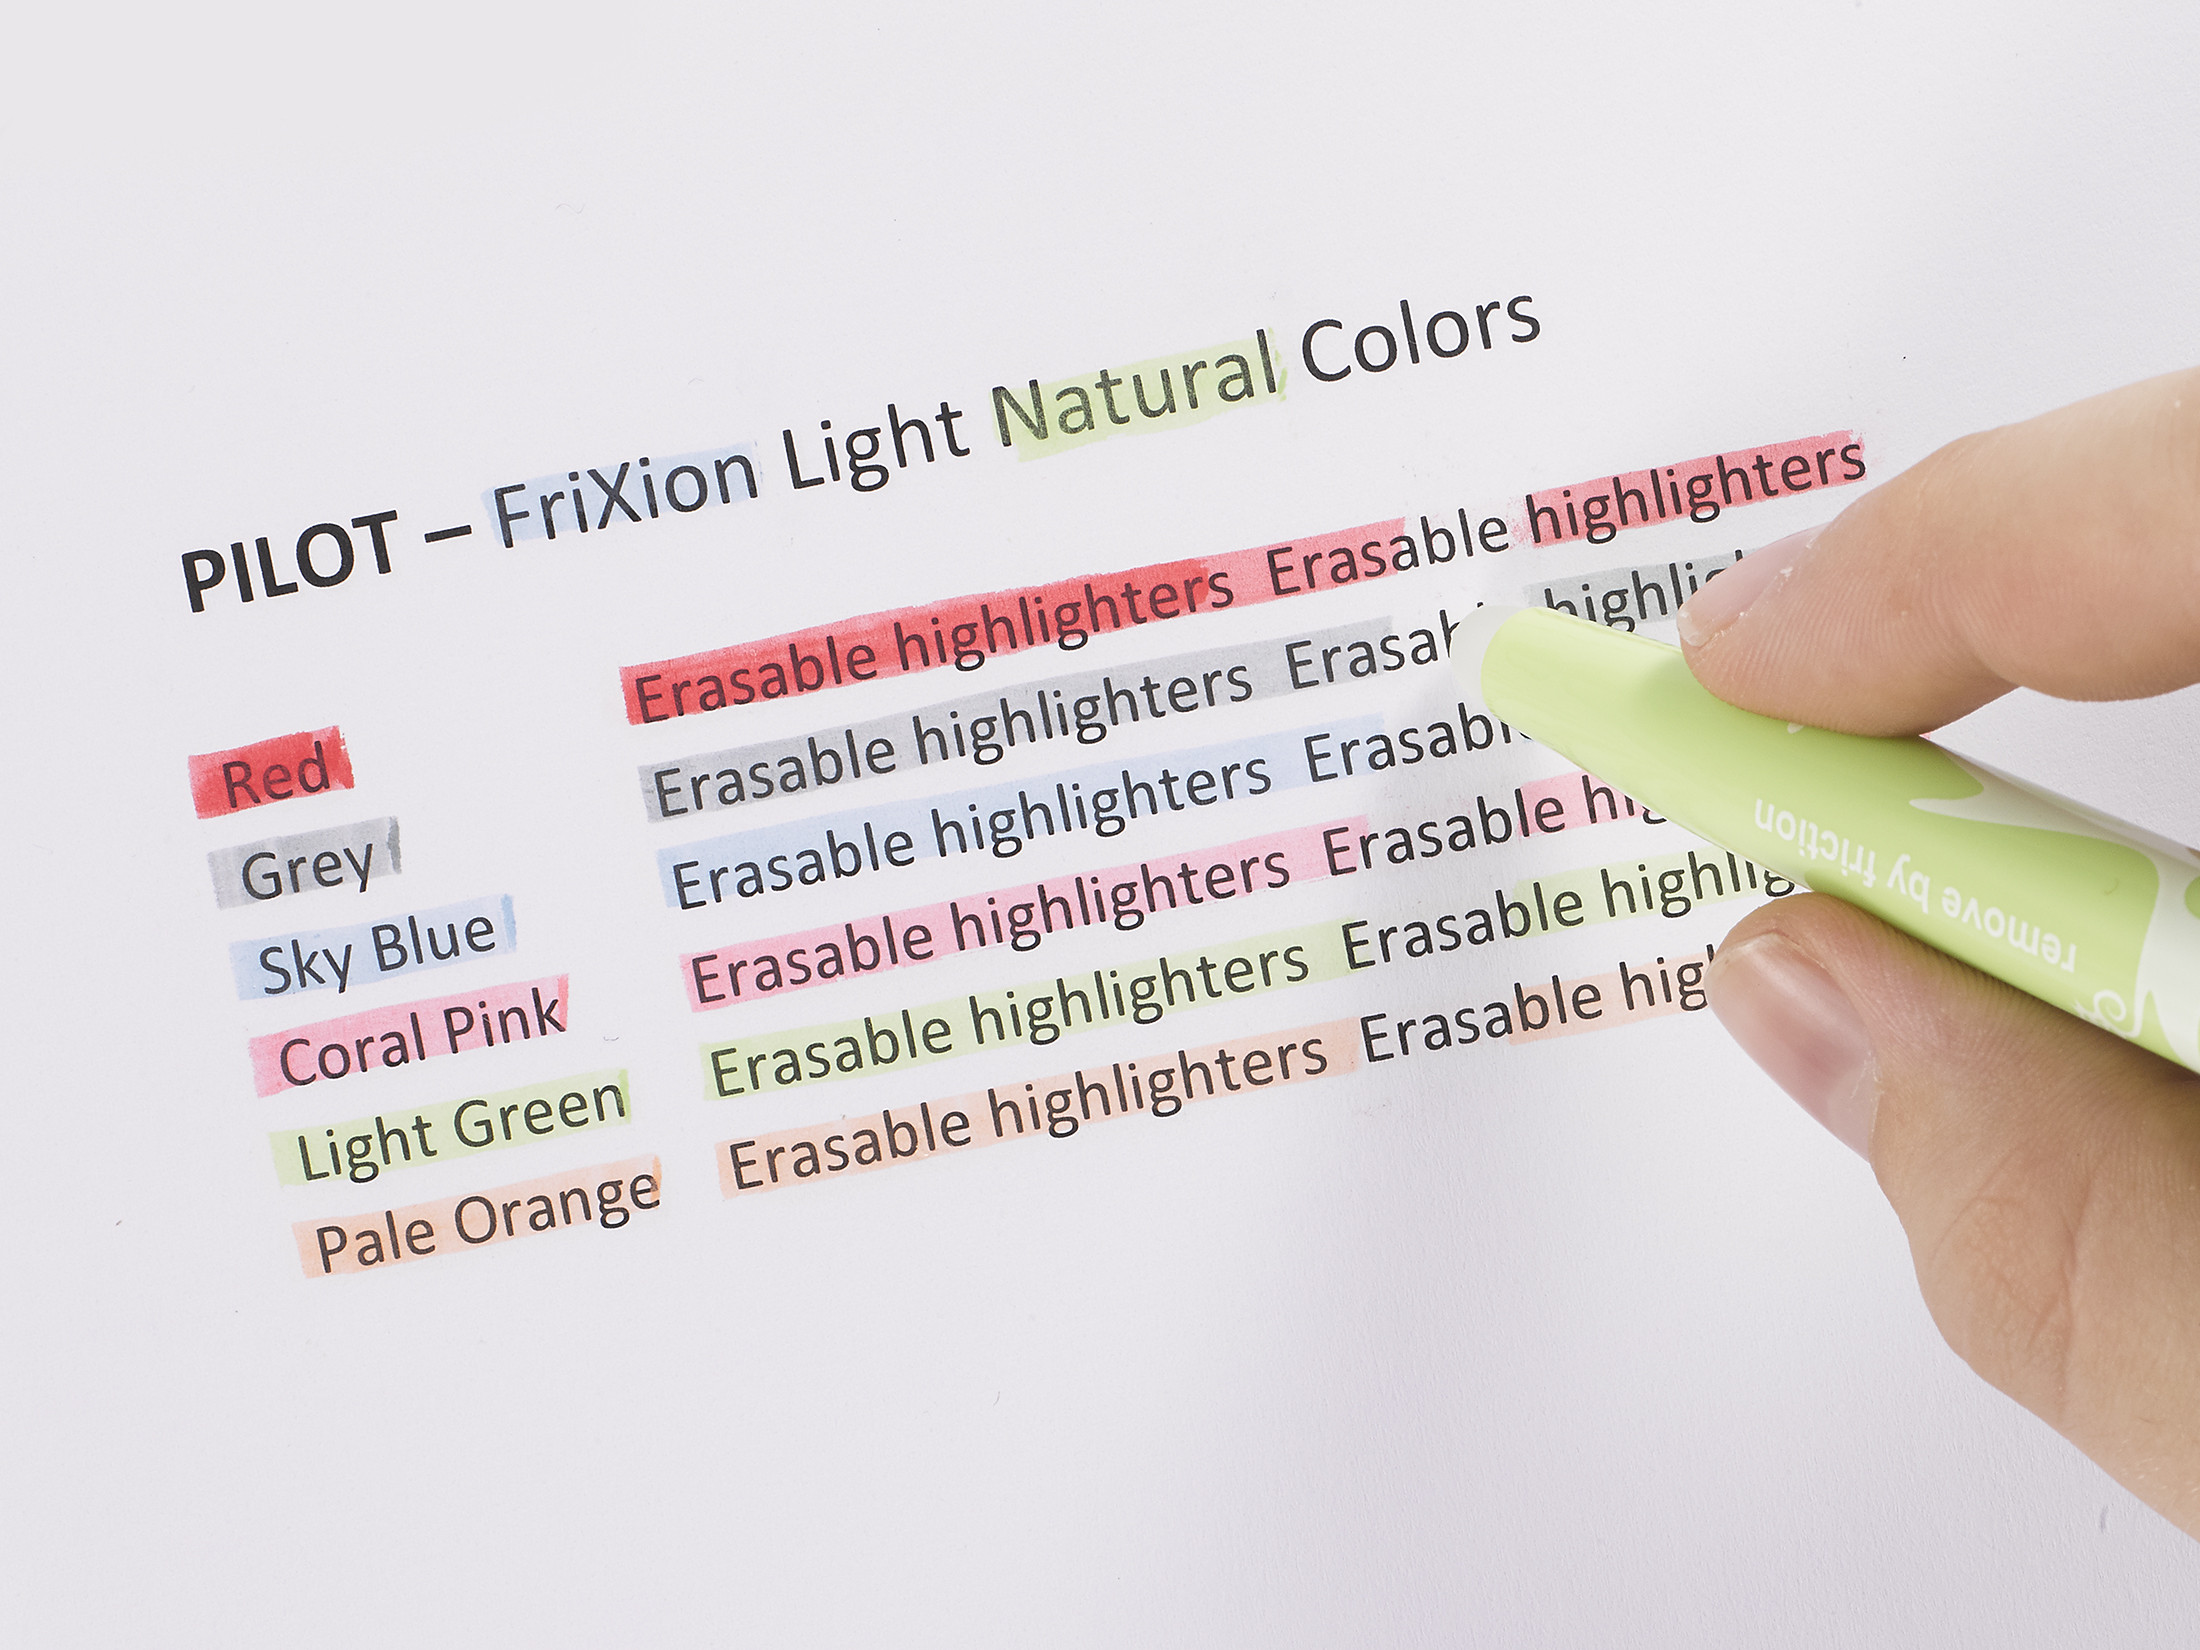 FriXion Light Natural